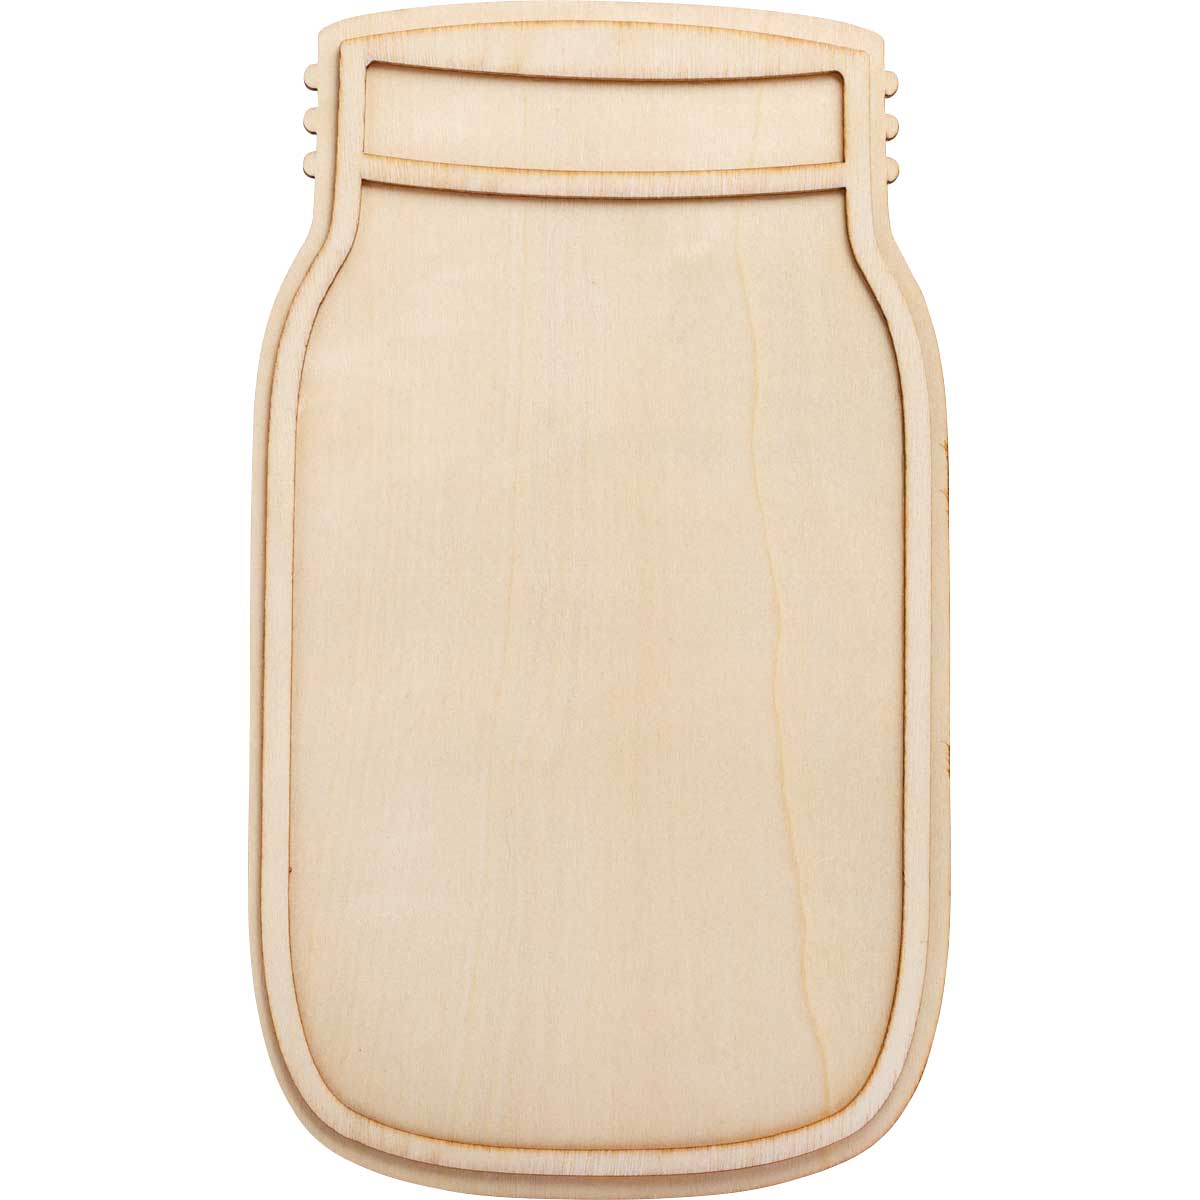 Plaid ® Wood Surfaces - Unpainted Layered Shapes - Mason Jar 10